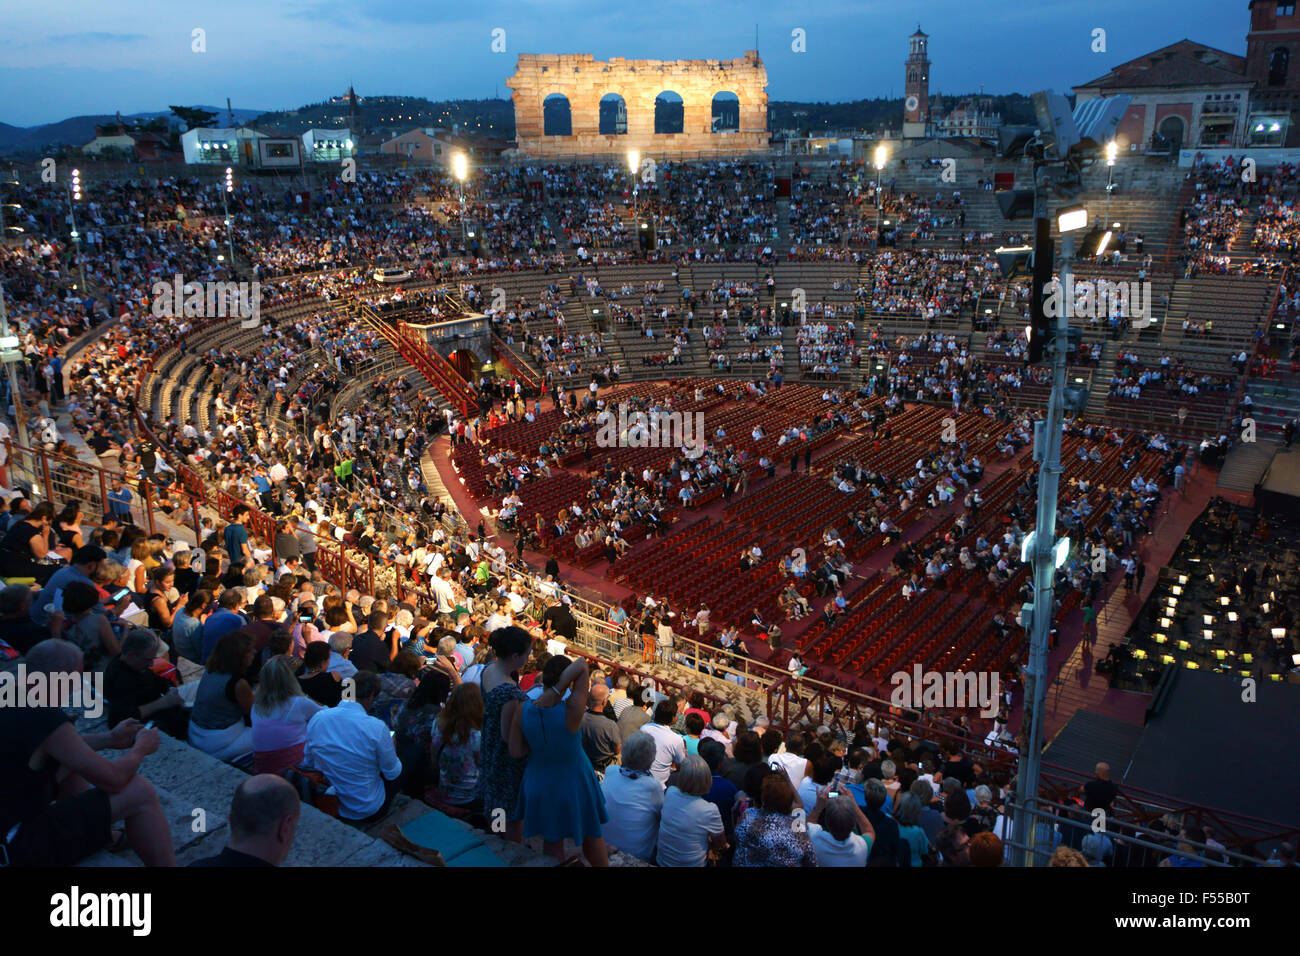 Zuschauer im Roman Amphitheatre anzeigen Oper "Nabucco" b G. Verdi, Verona, Veneto, Italien Stockfoto